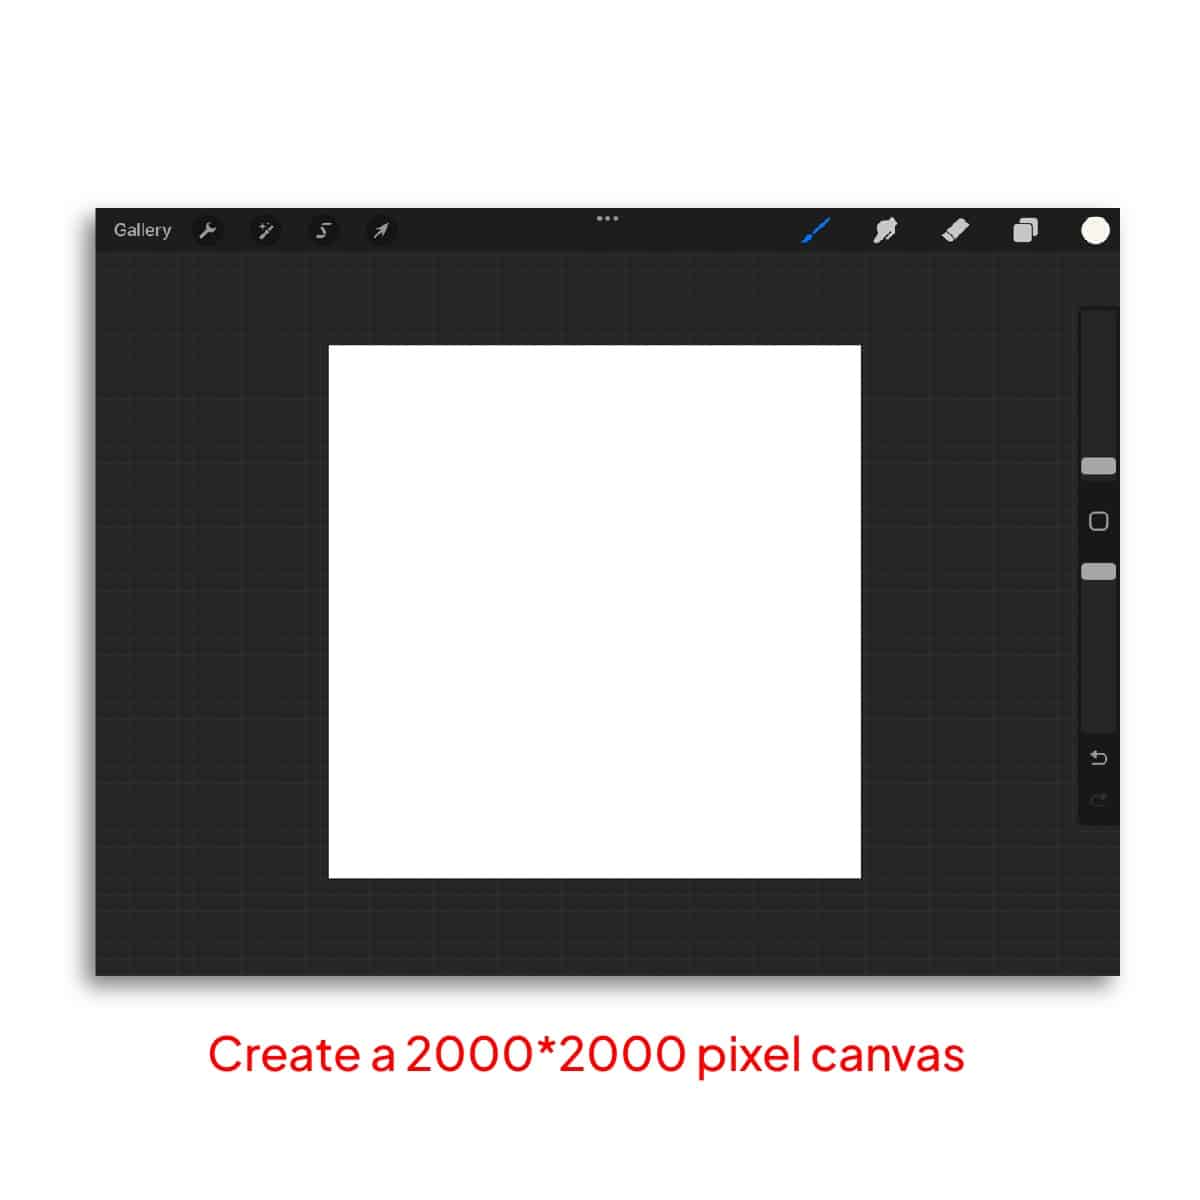 Pixel canvas